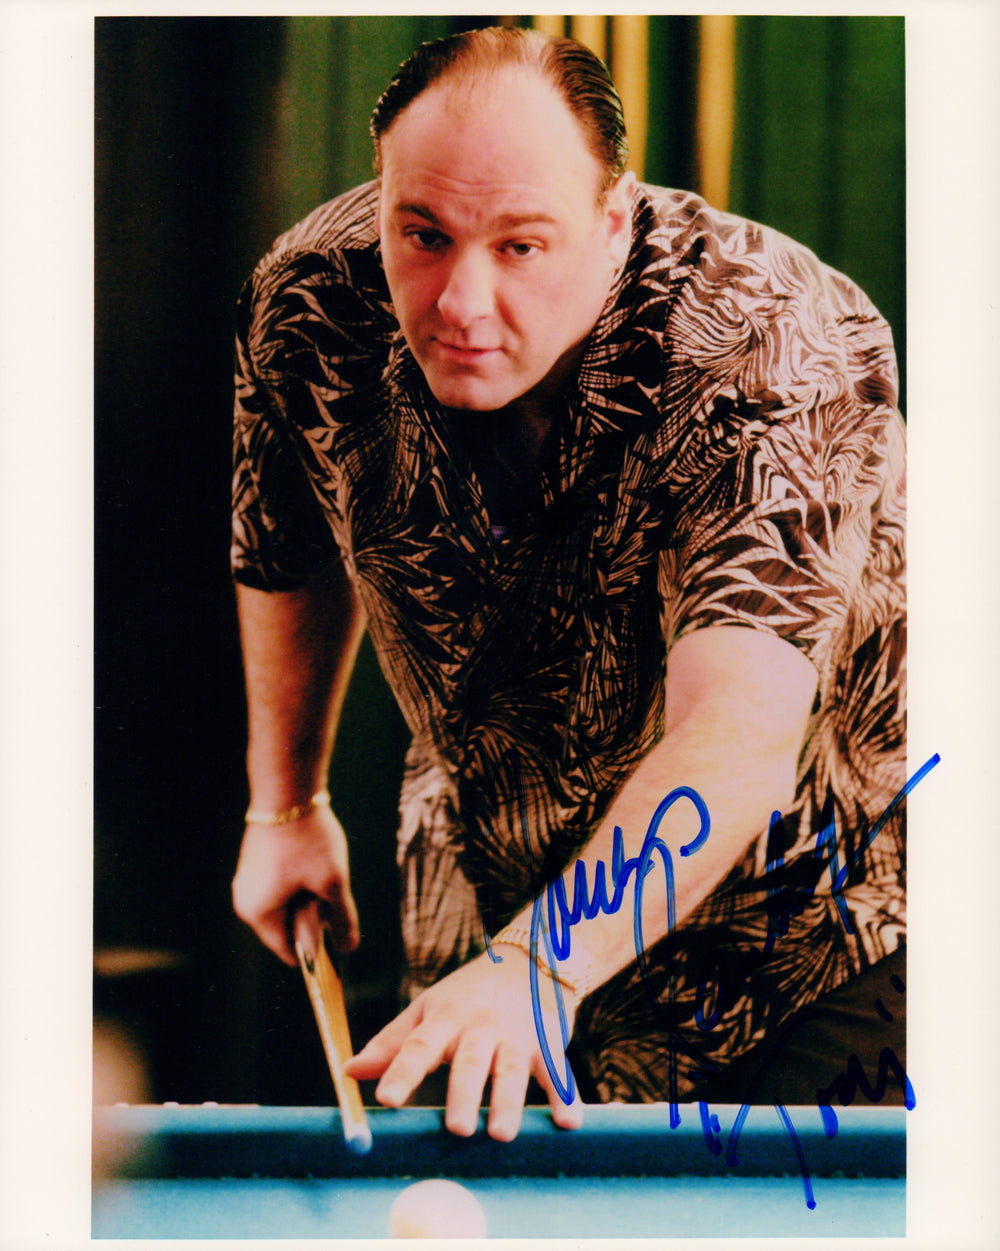 James Gandolfini as Tony Soprano in The Sopranos Signed 8x10 Photo with Character Name